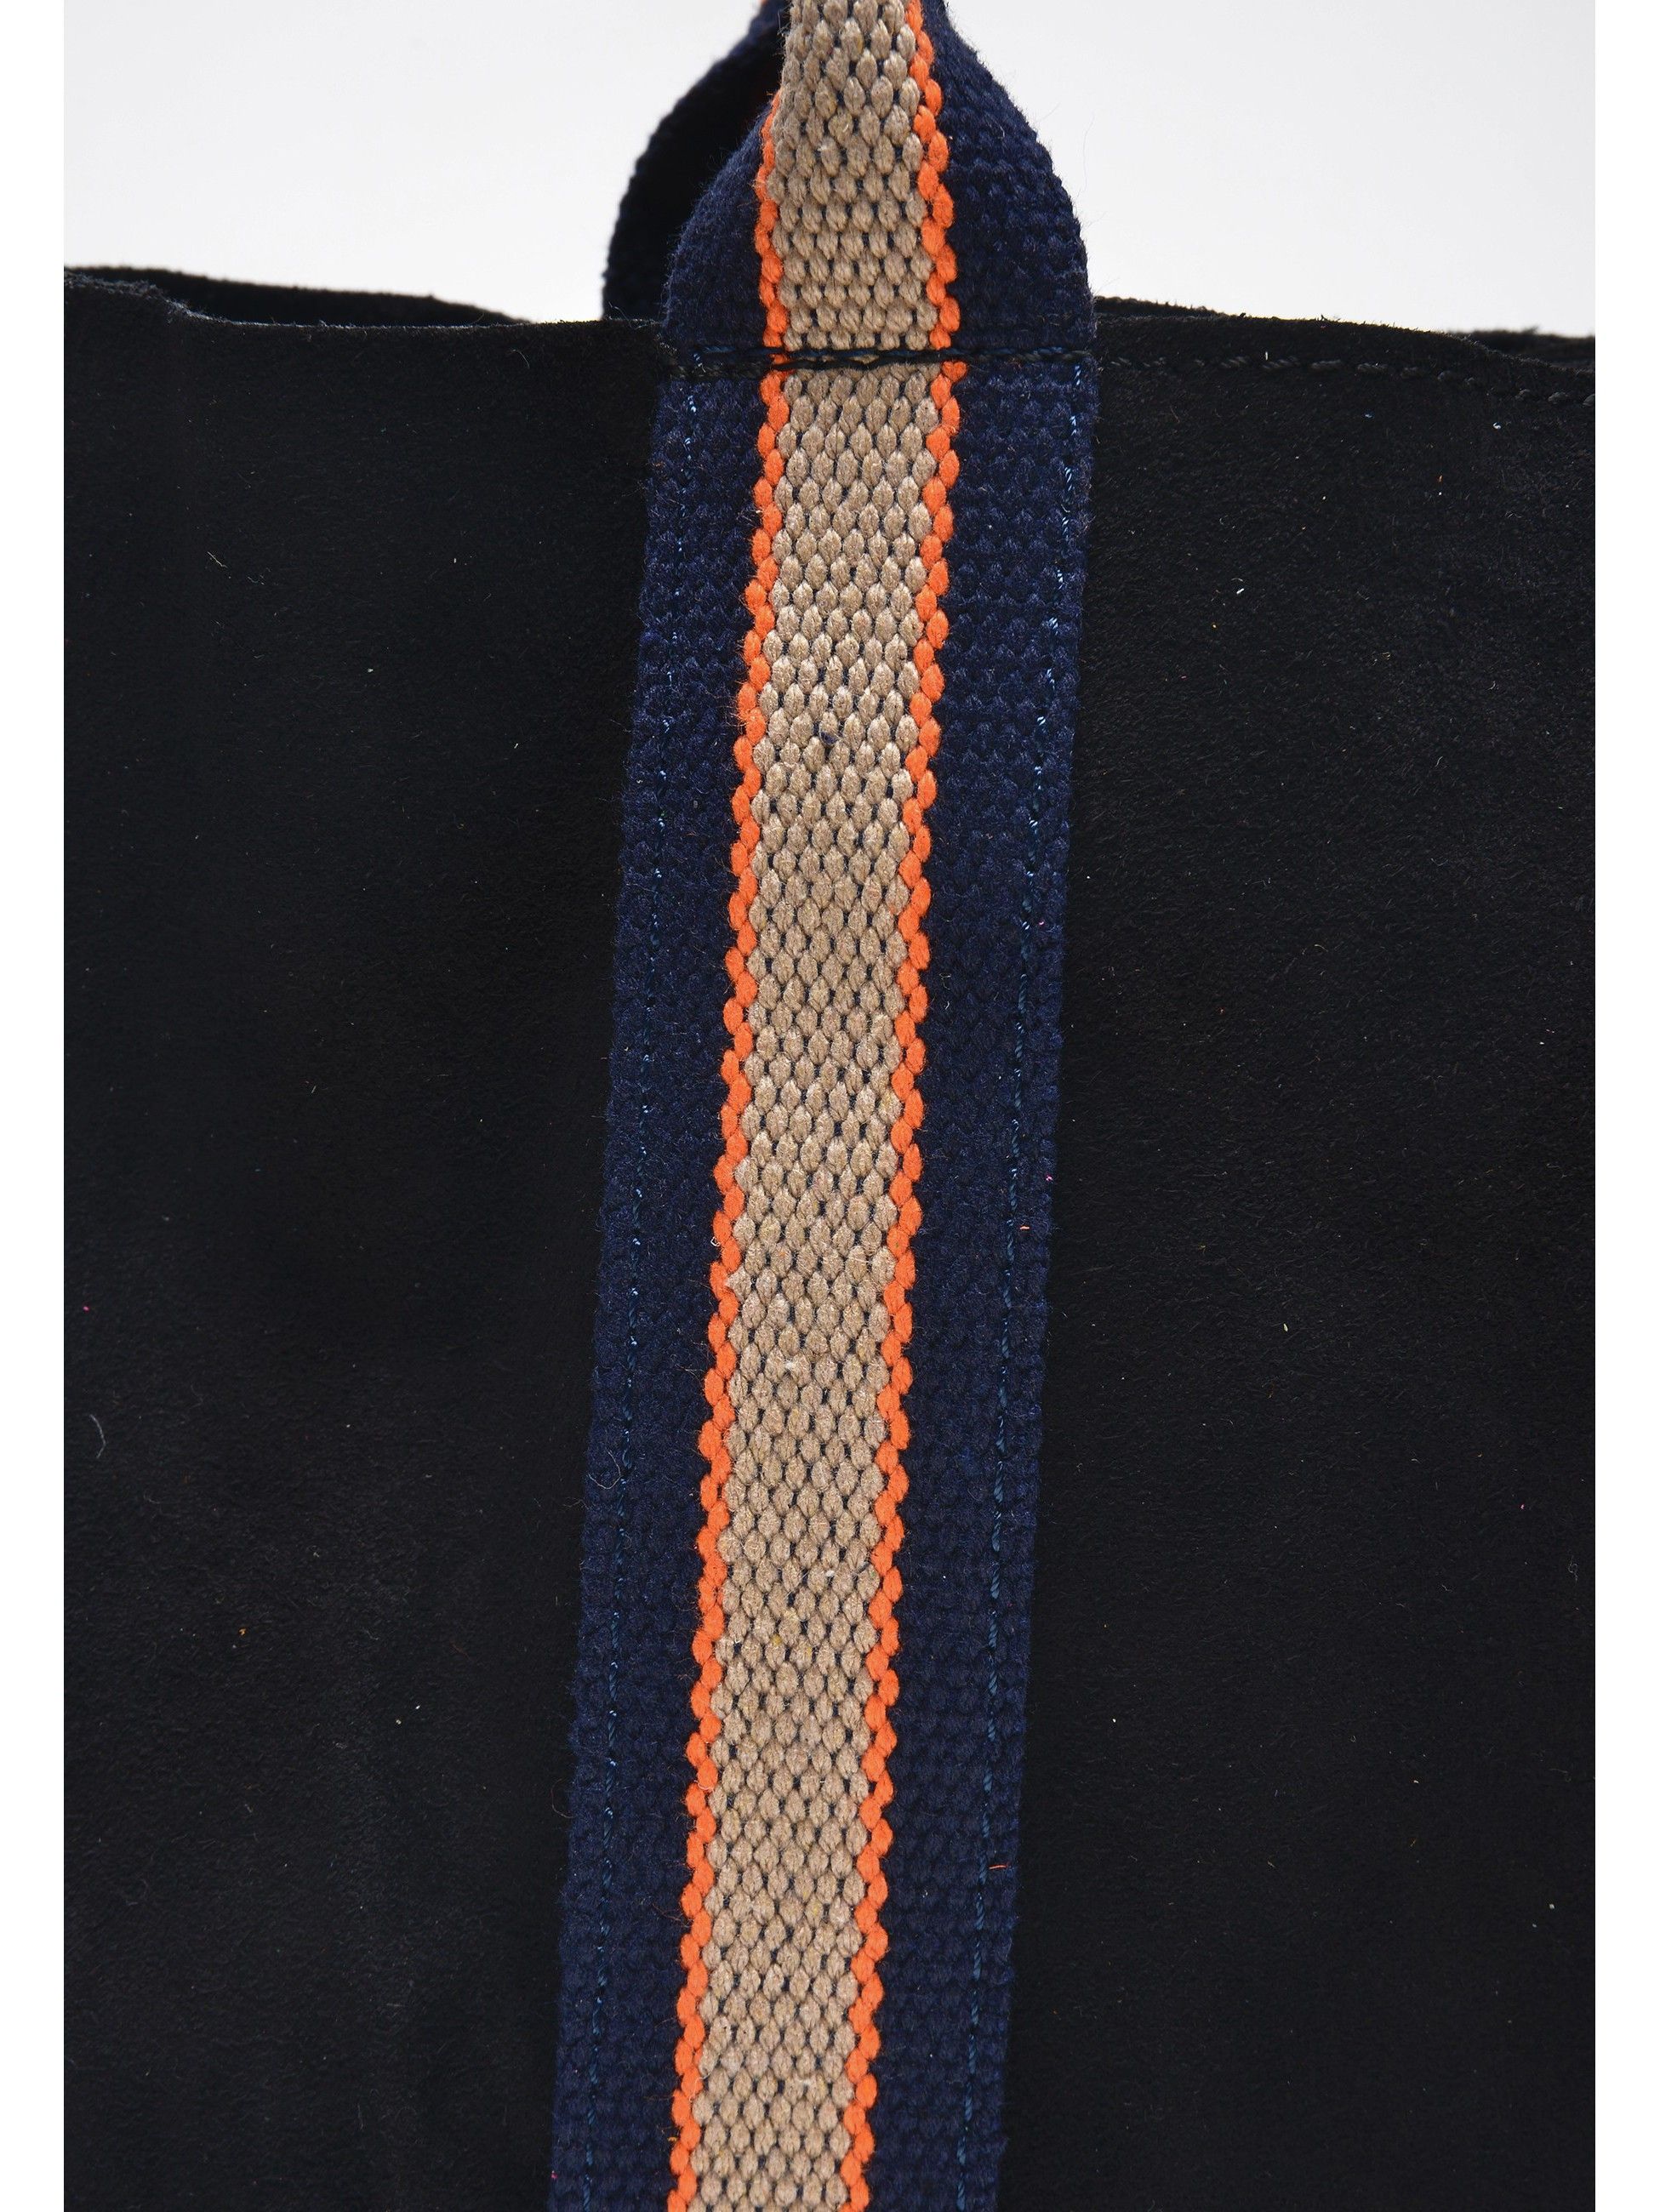 Top Handle Bag
100% suede
Top zip closure
Inner zip pocket
Dimensions (L): 28x36.5x11 cm
Handle: 43 cm
Shoulder strap: /